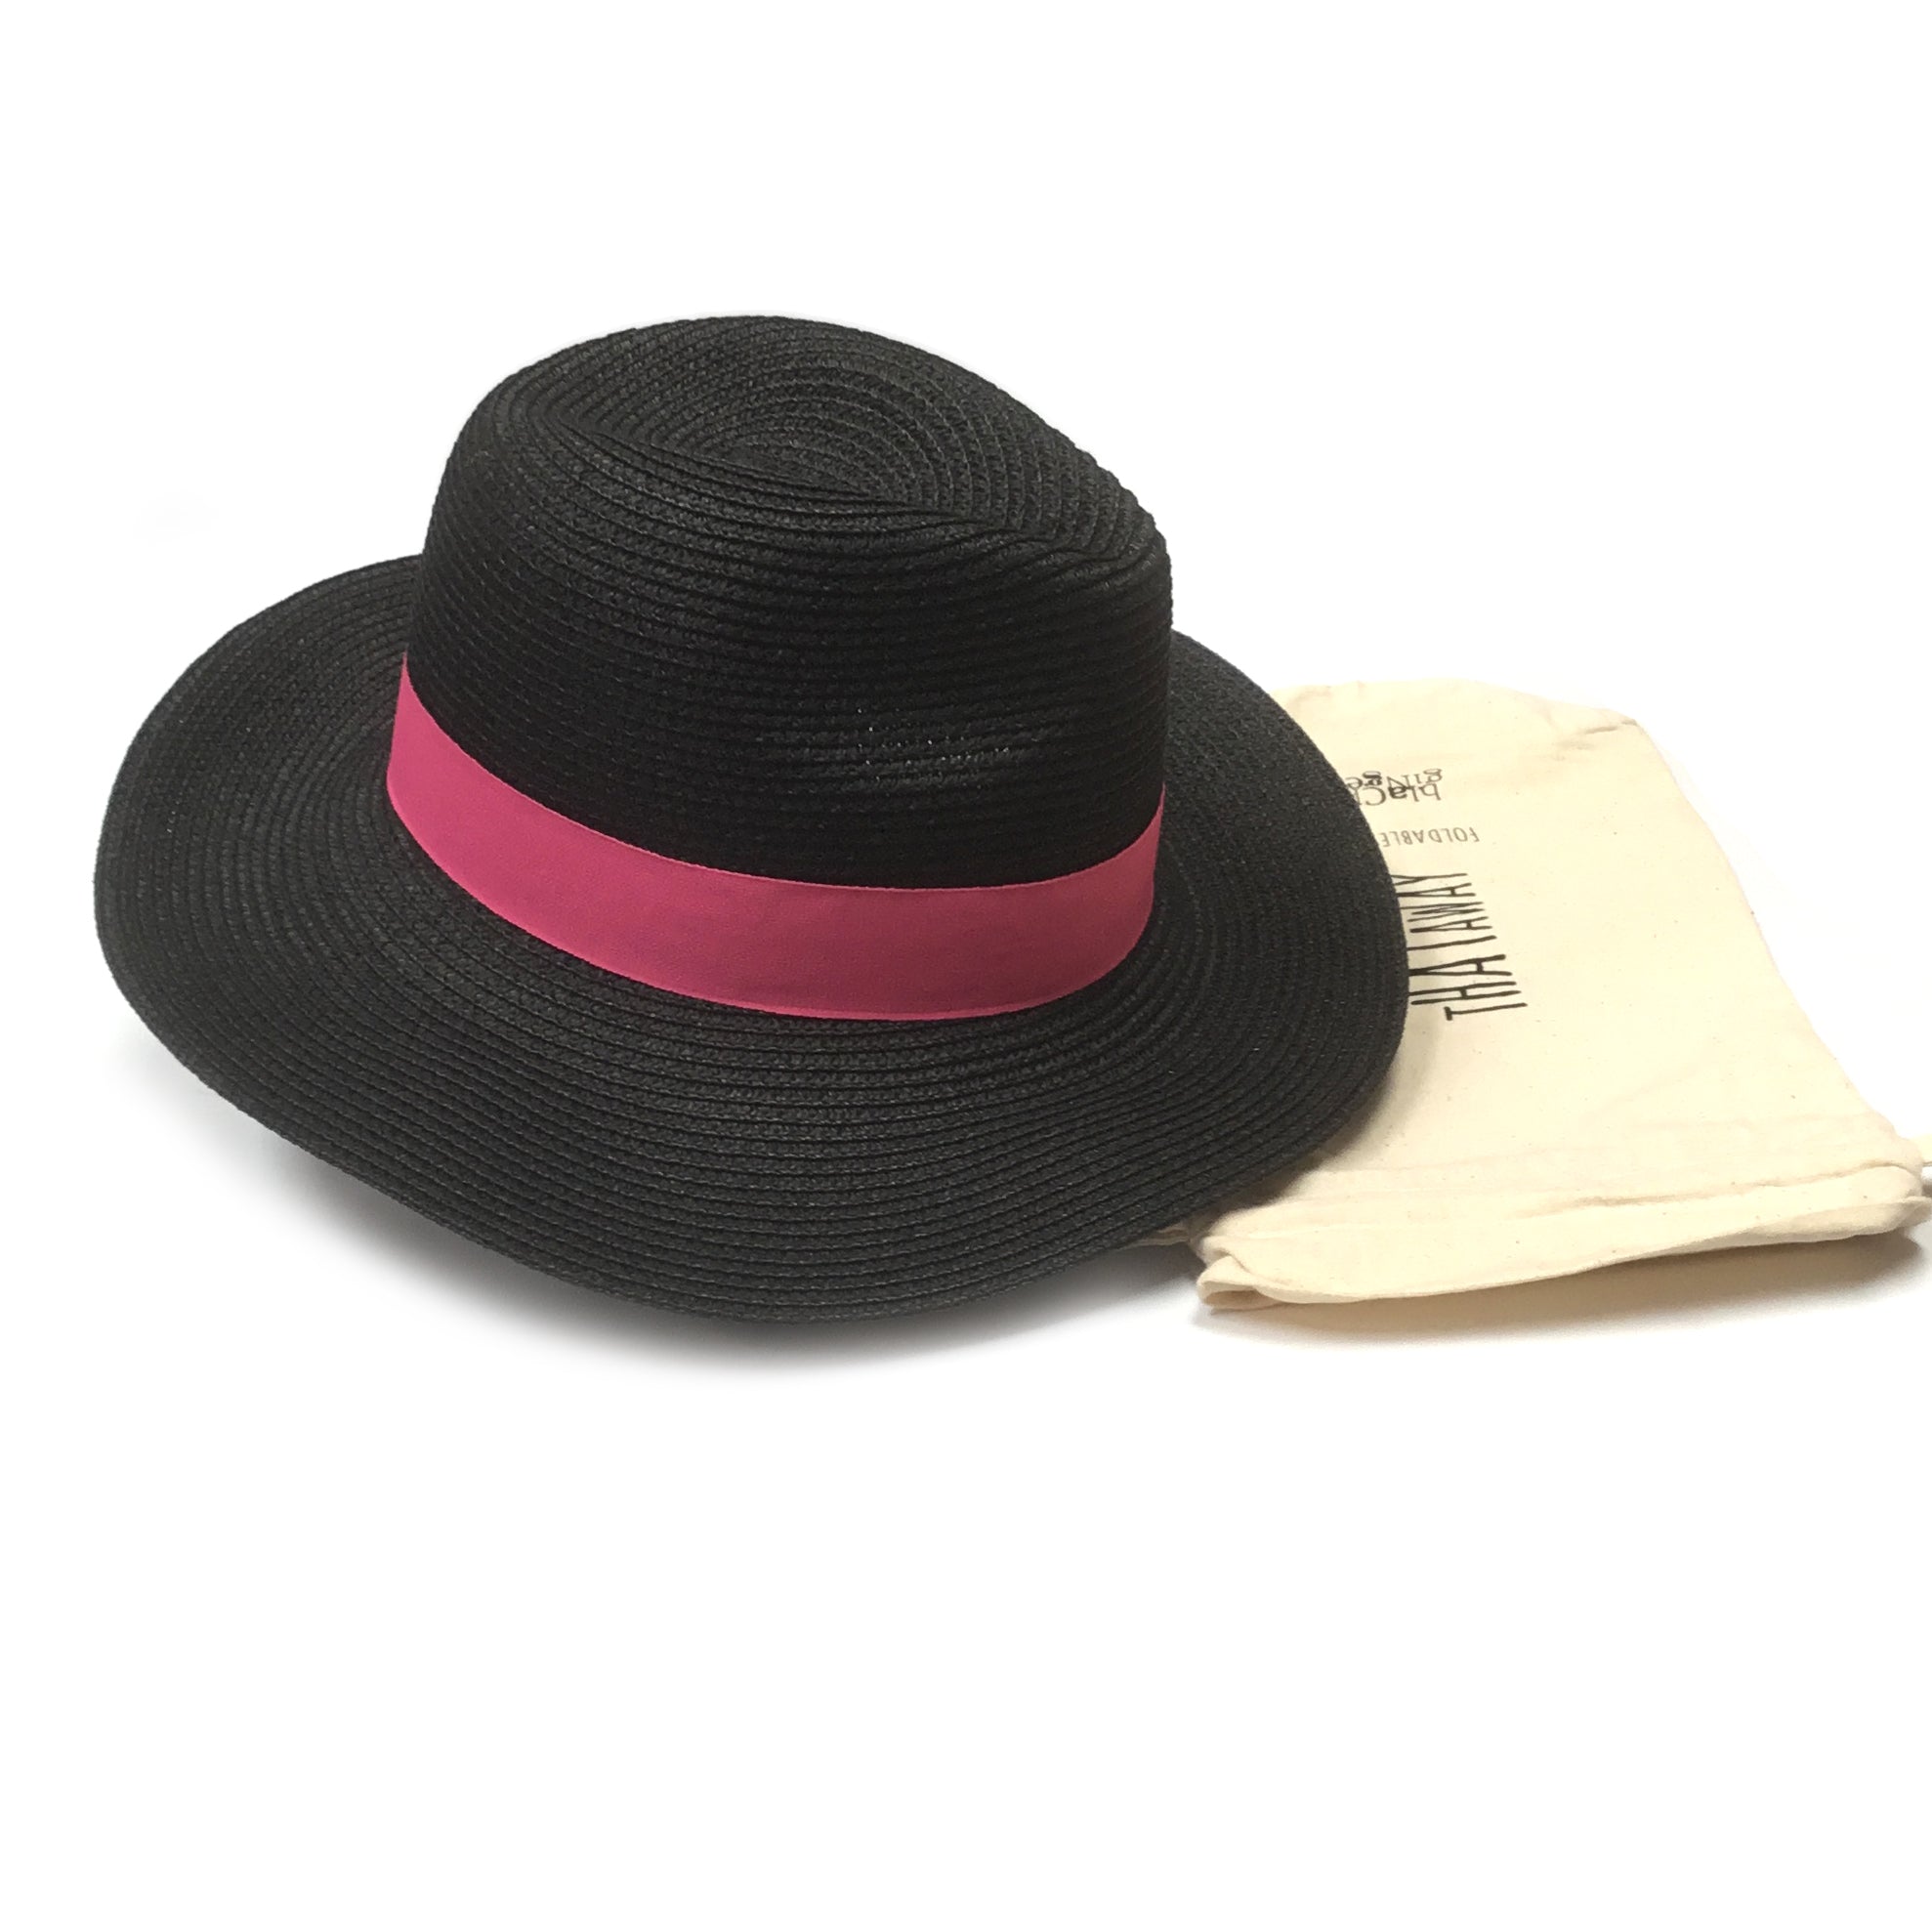 Folding Travel Panama Sun Hat - Black & Pink